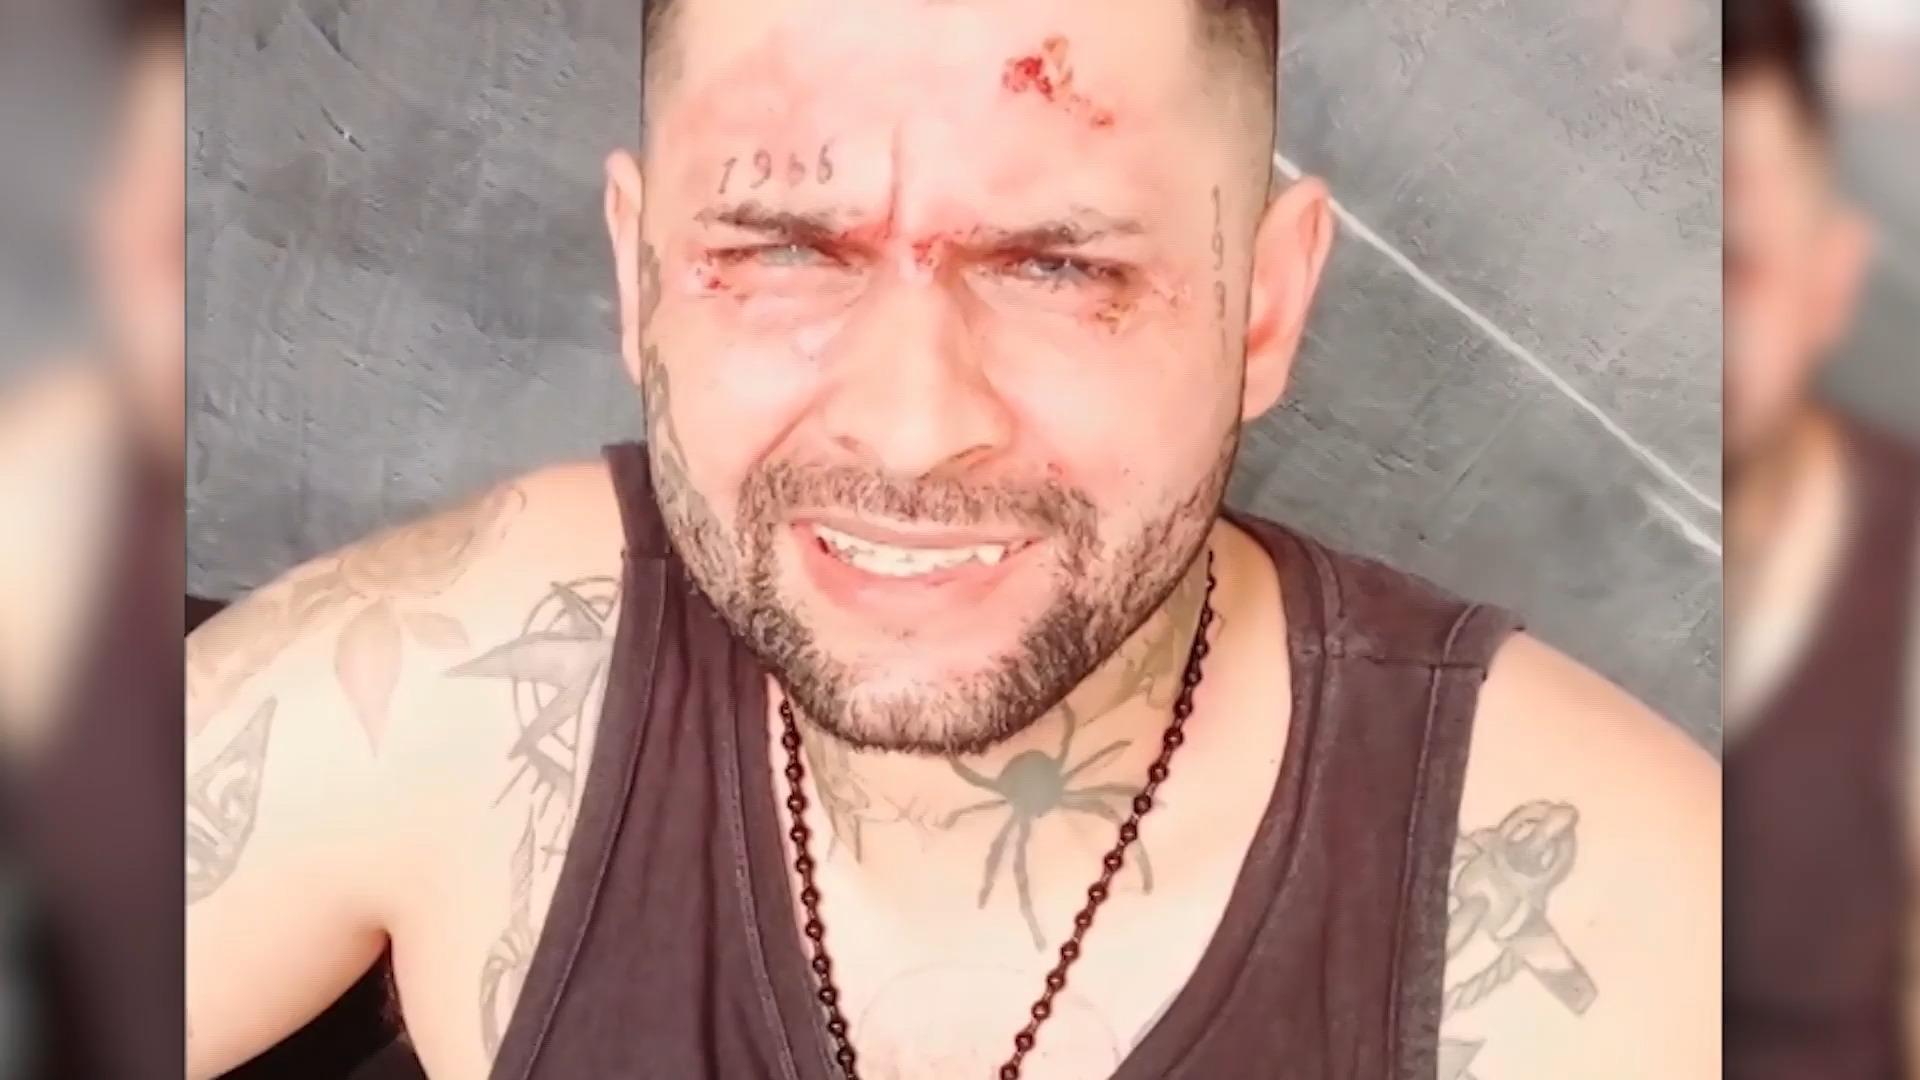 His ex acid attack on tattoo artist